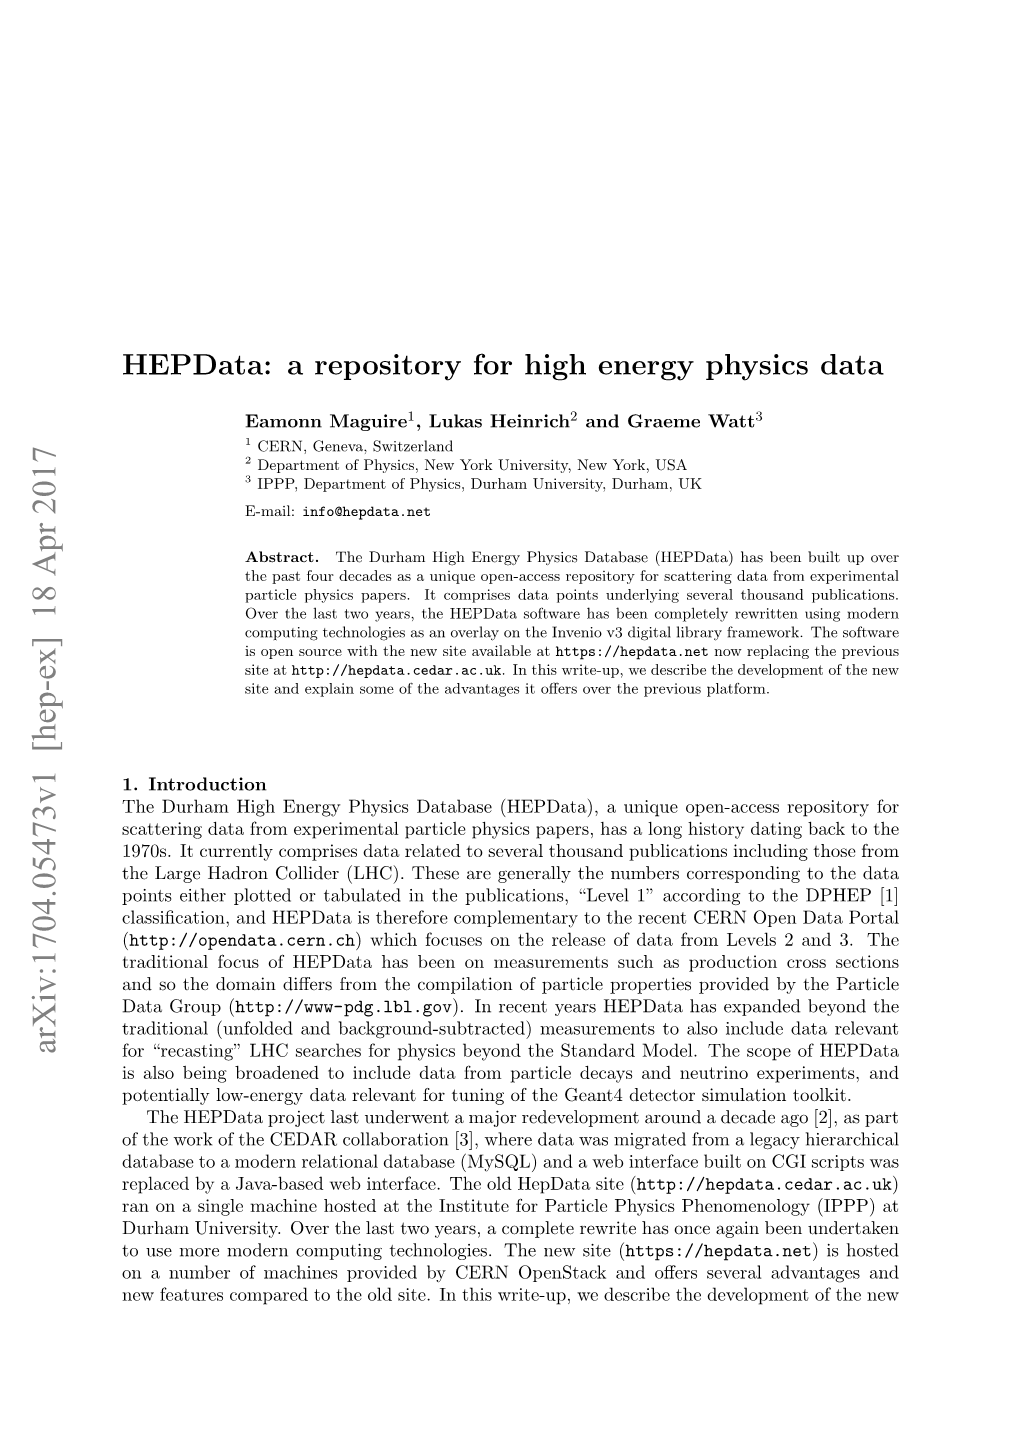 Hepdata: a Repository for High Energy Physics Data